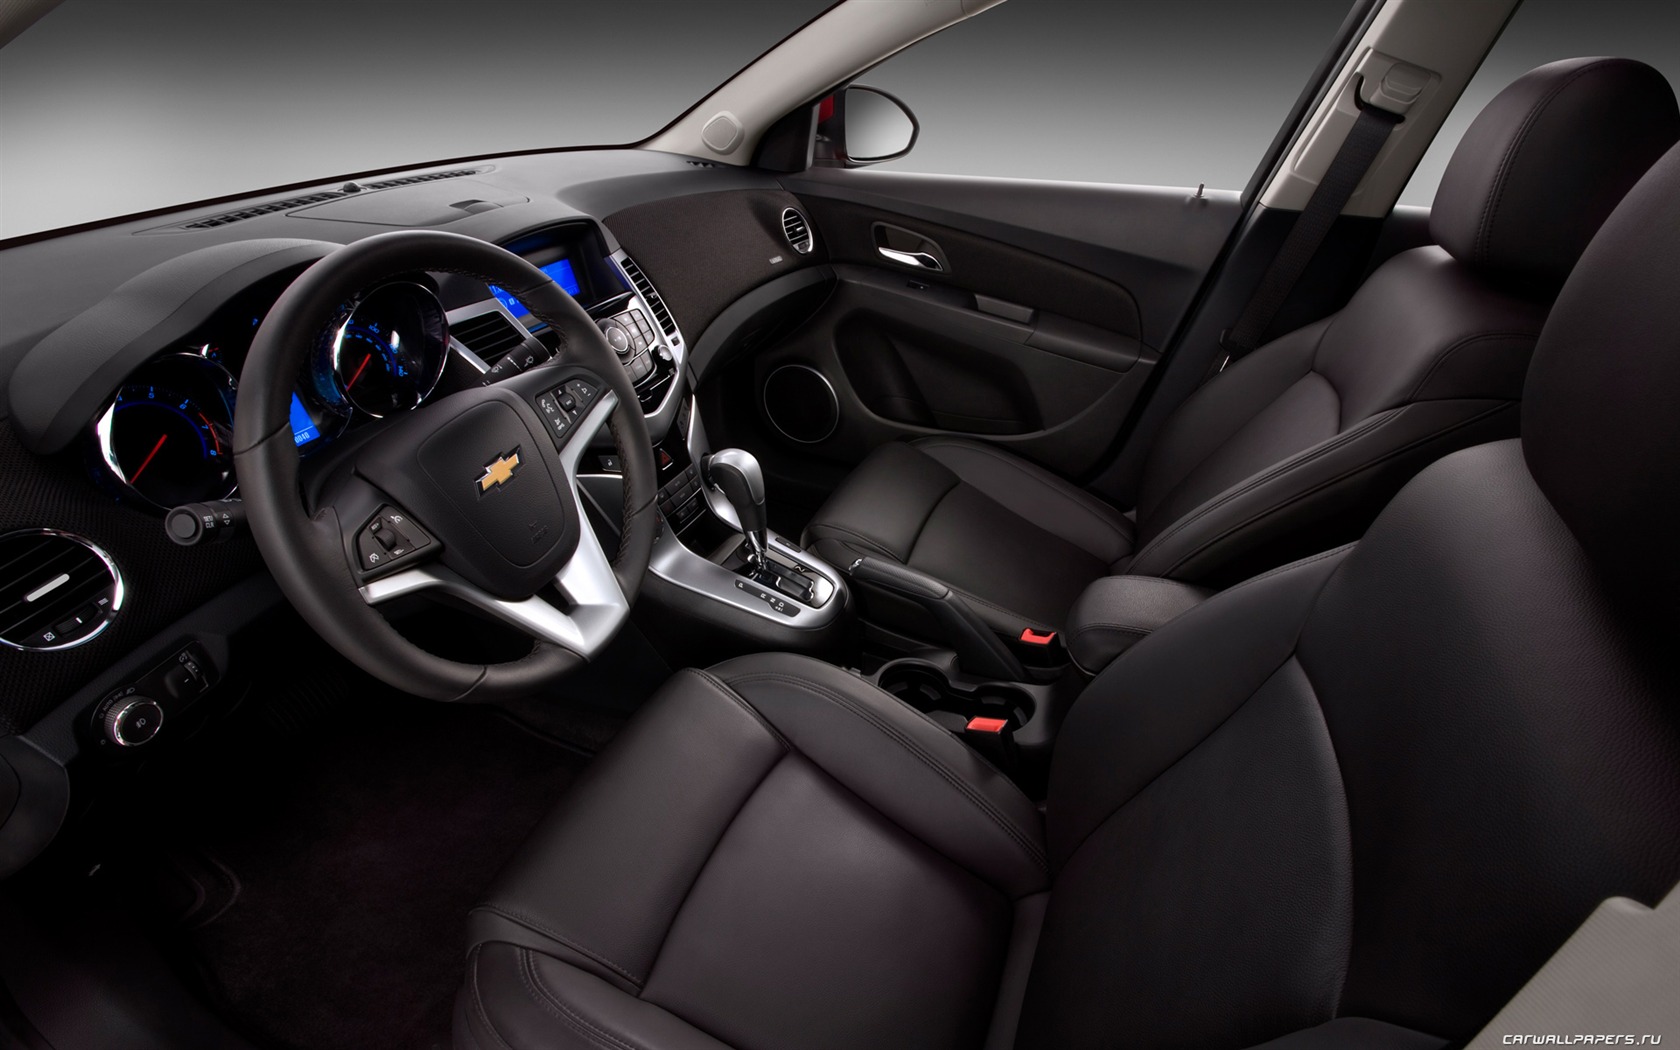 Chevrolet Cruze RS - 2011 雪佛兰13 - 1680x1050